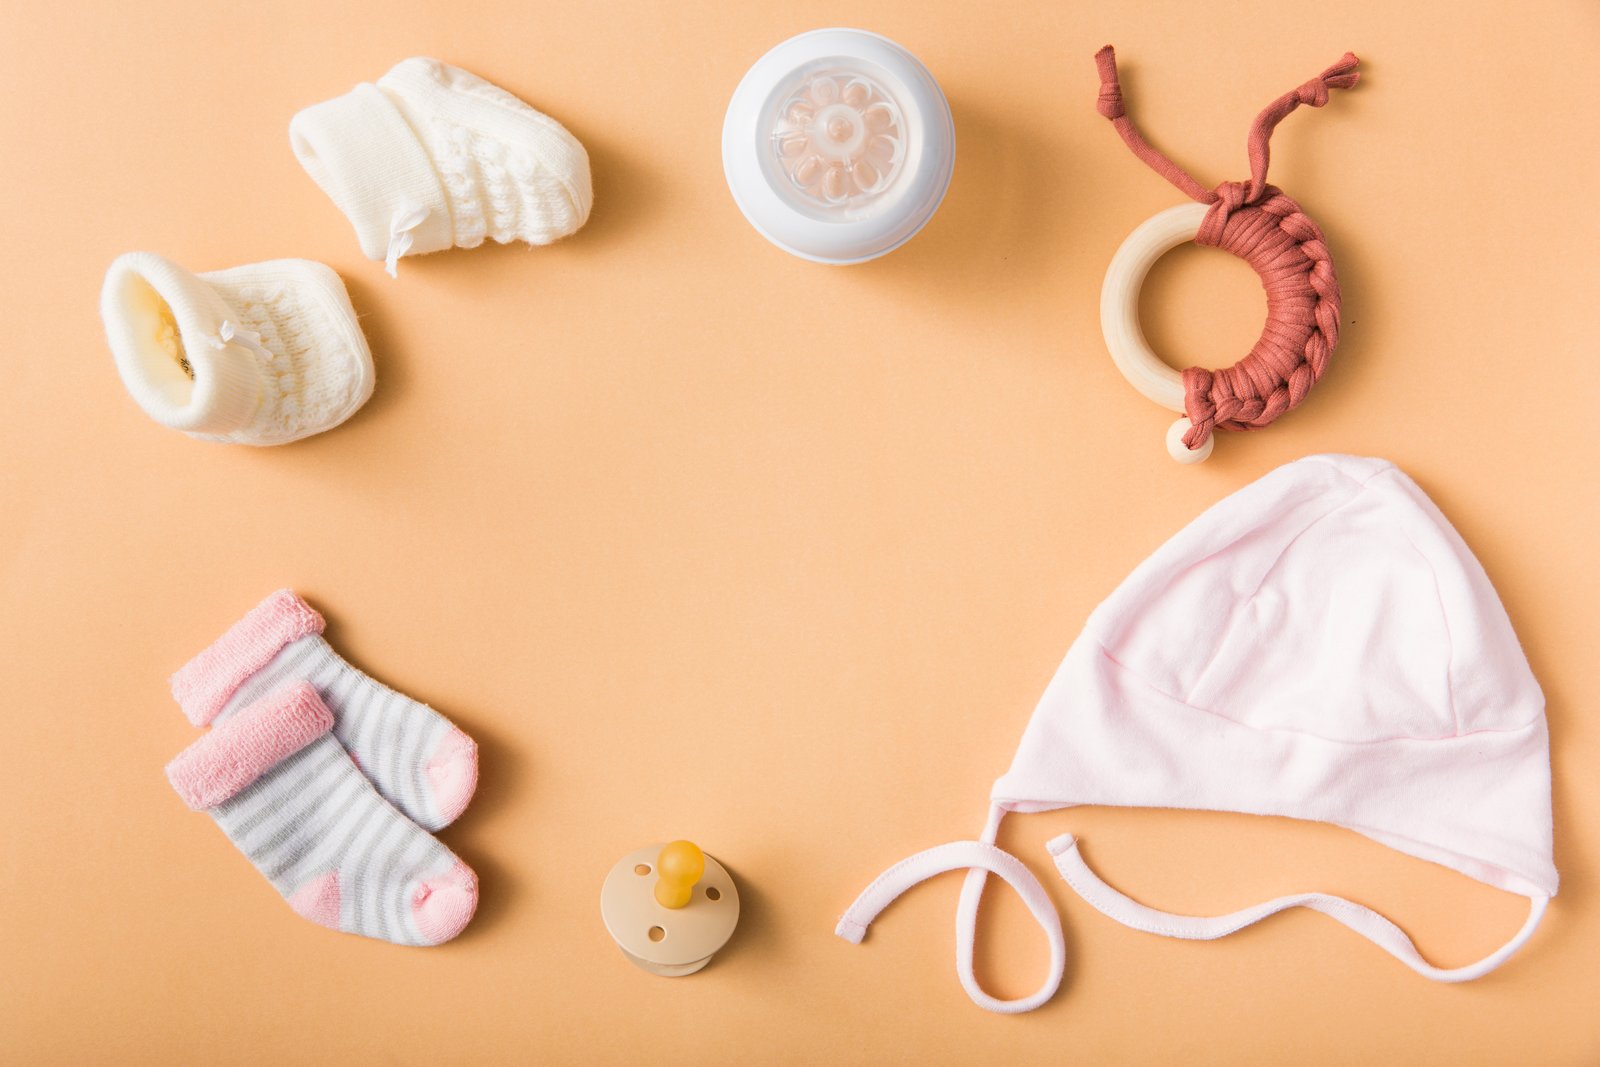 baby-s-sock-pair-woolen-shoes-pacifier-cap-milk-bottle-toy-orange-background